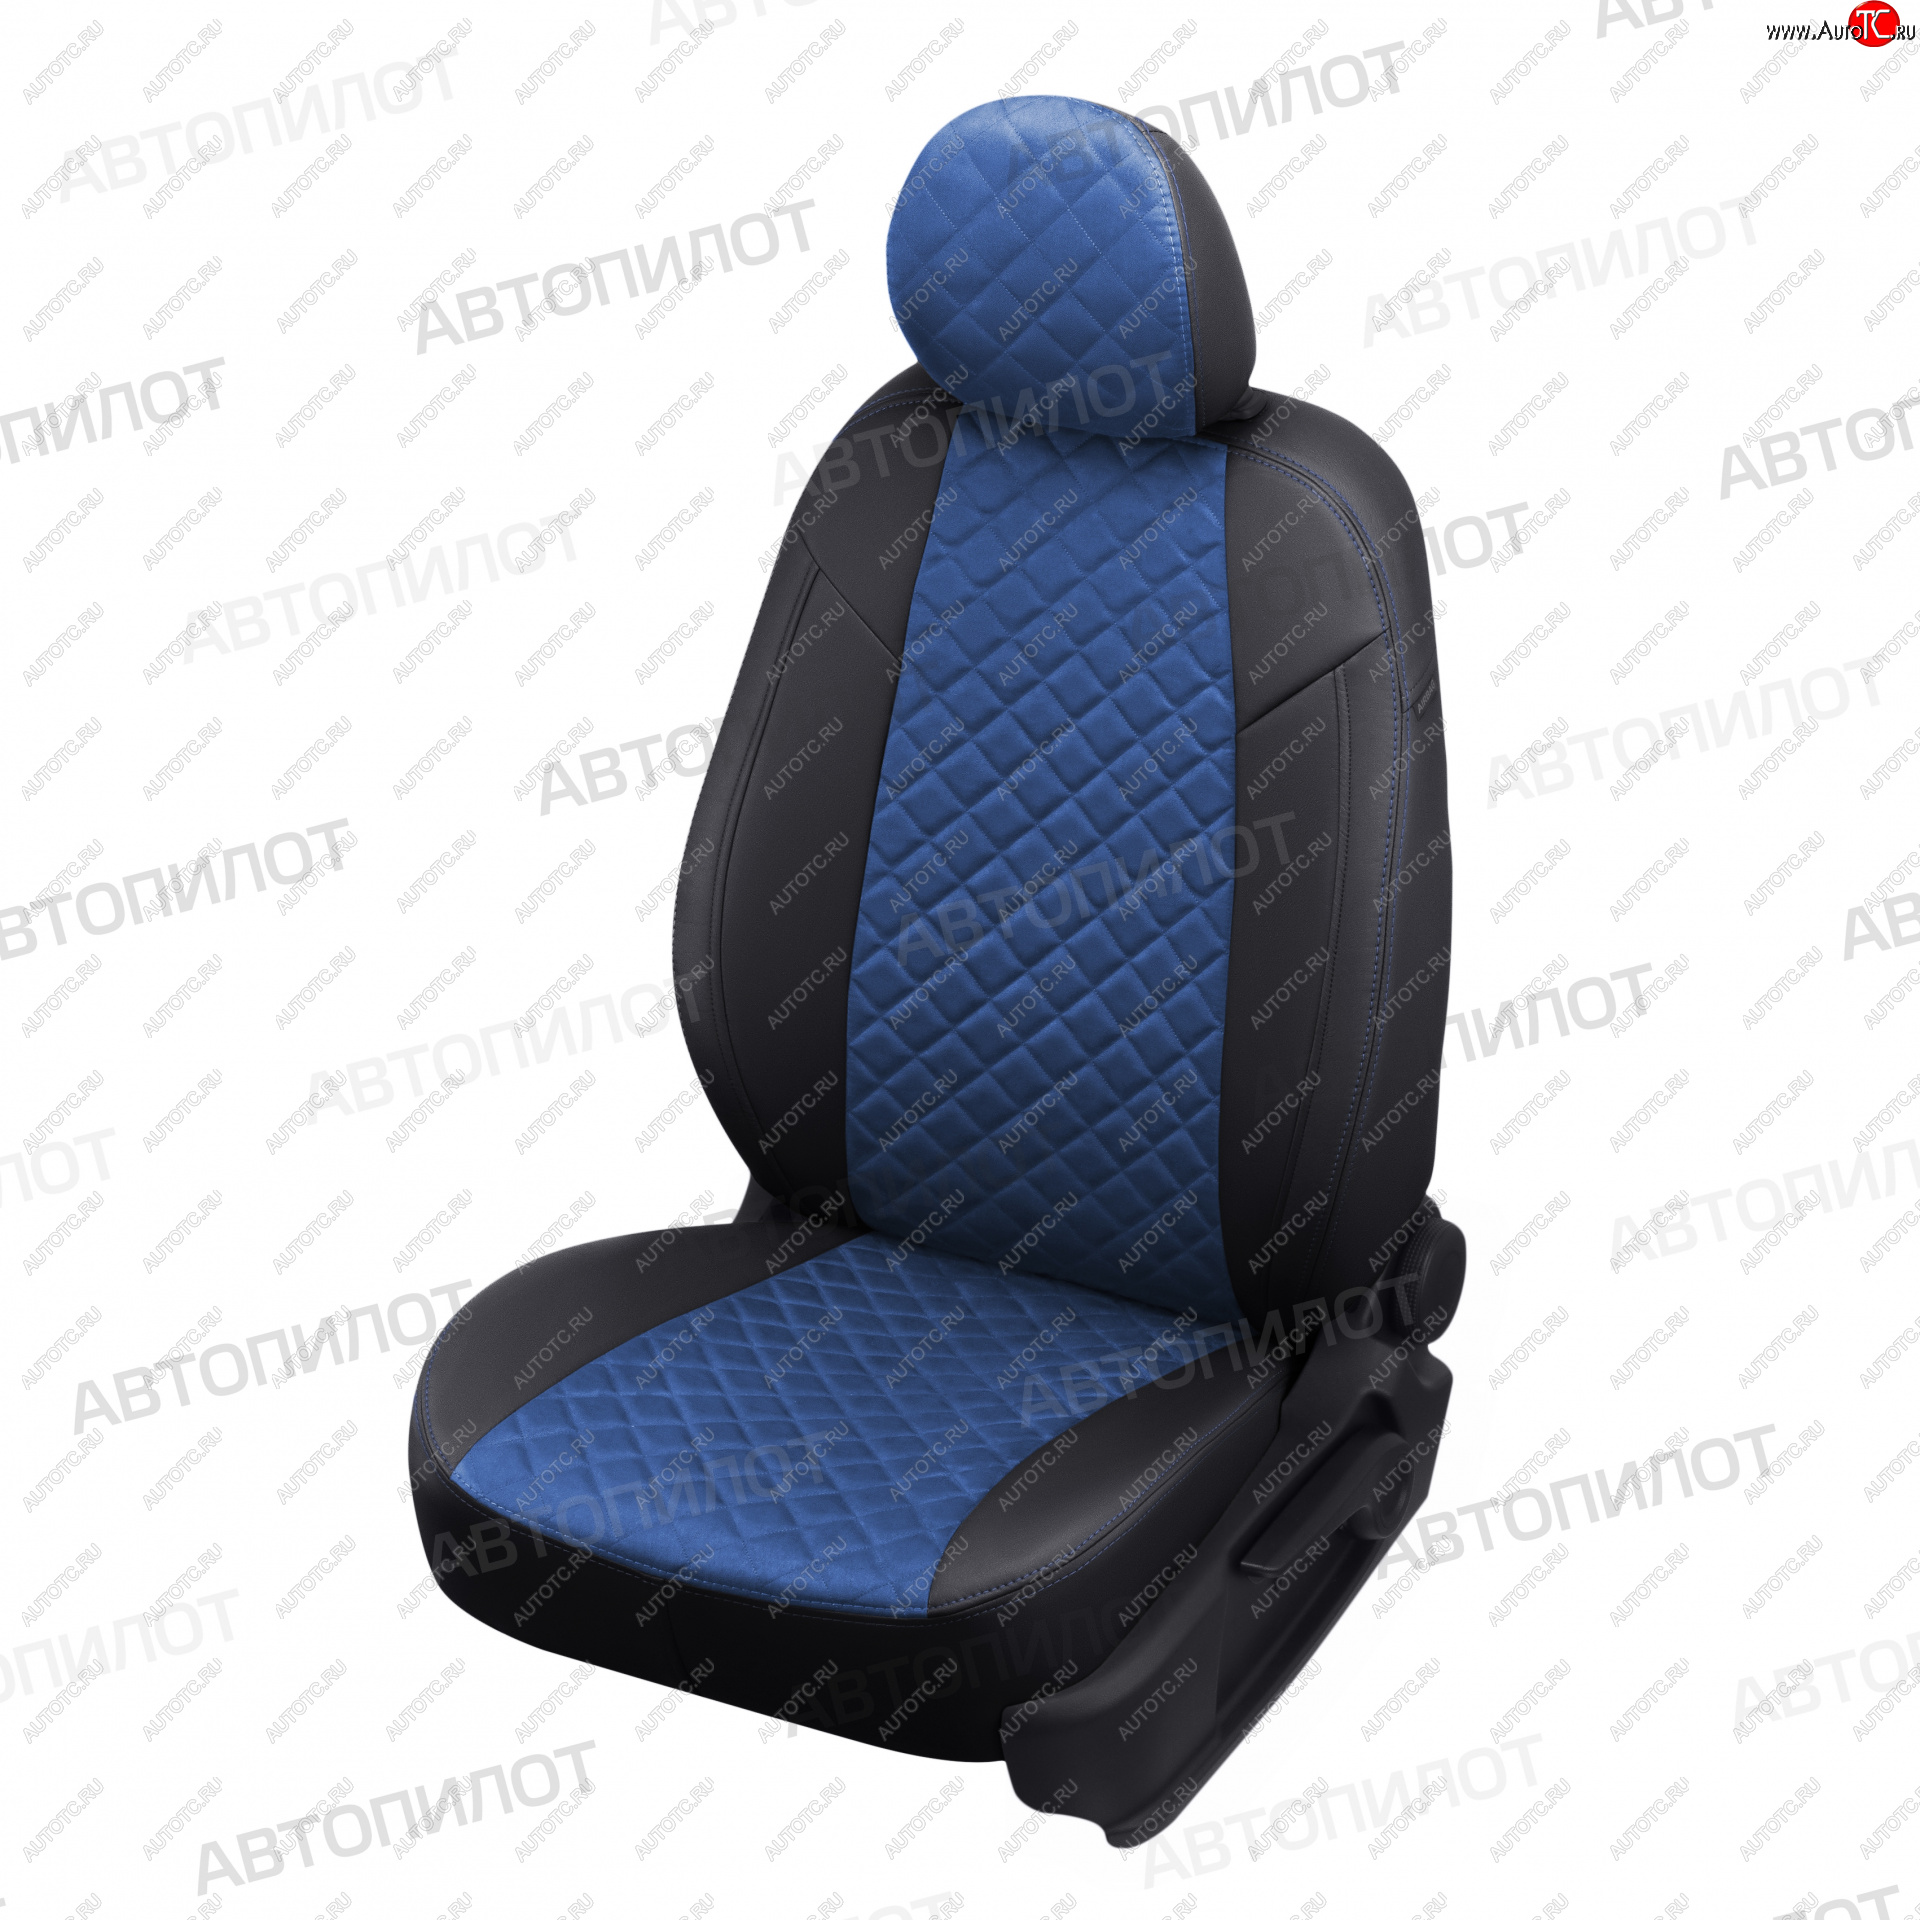 13 999 р. Чехлы сидений (экокожа/алькантара) Автопилот Ромб  KIA Rio  1 DC (2000-2005) (черный/синий)